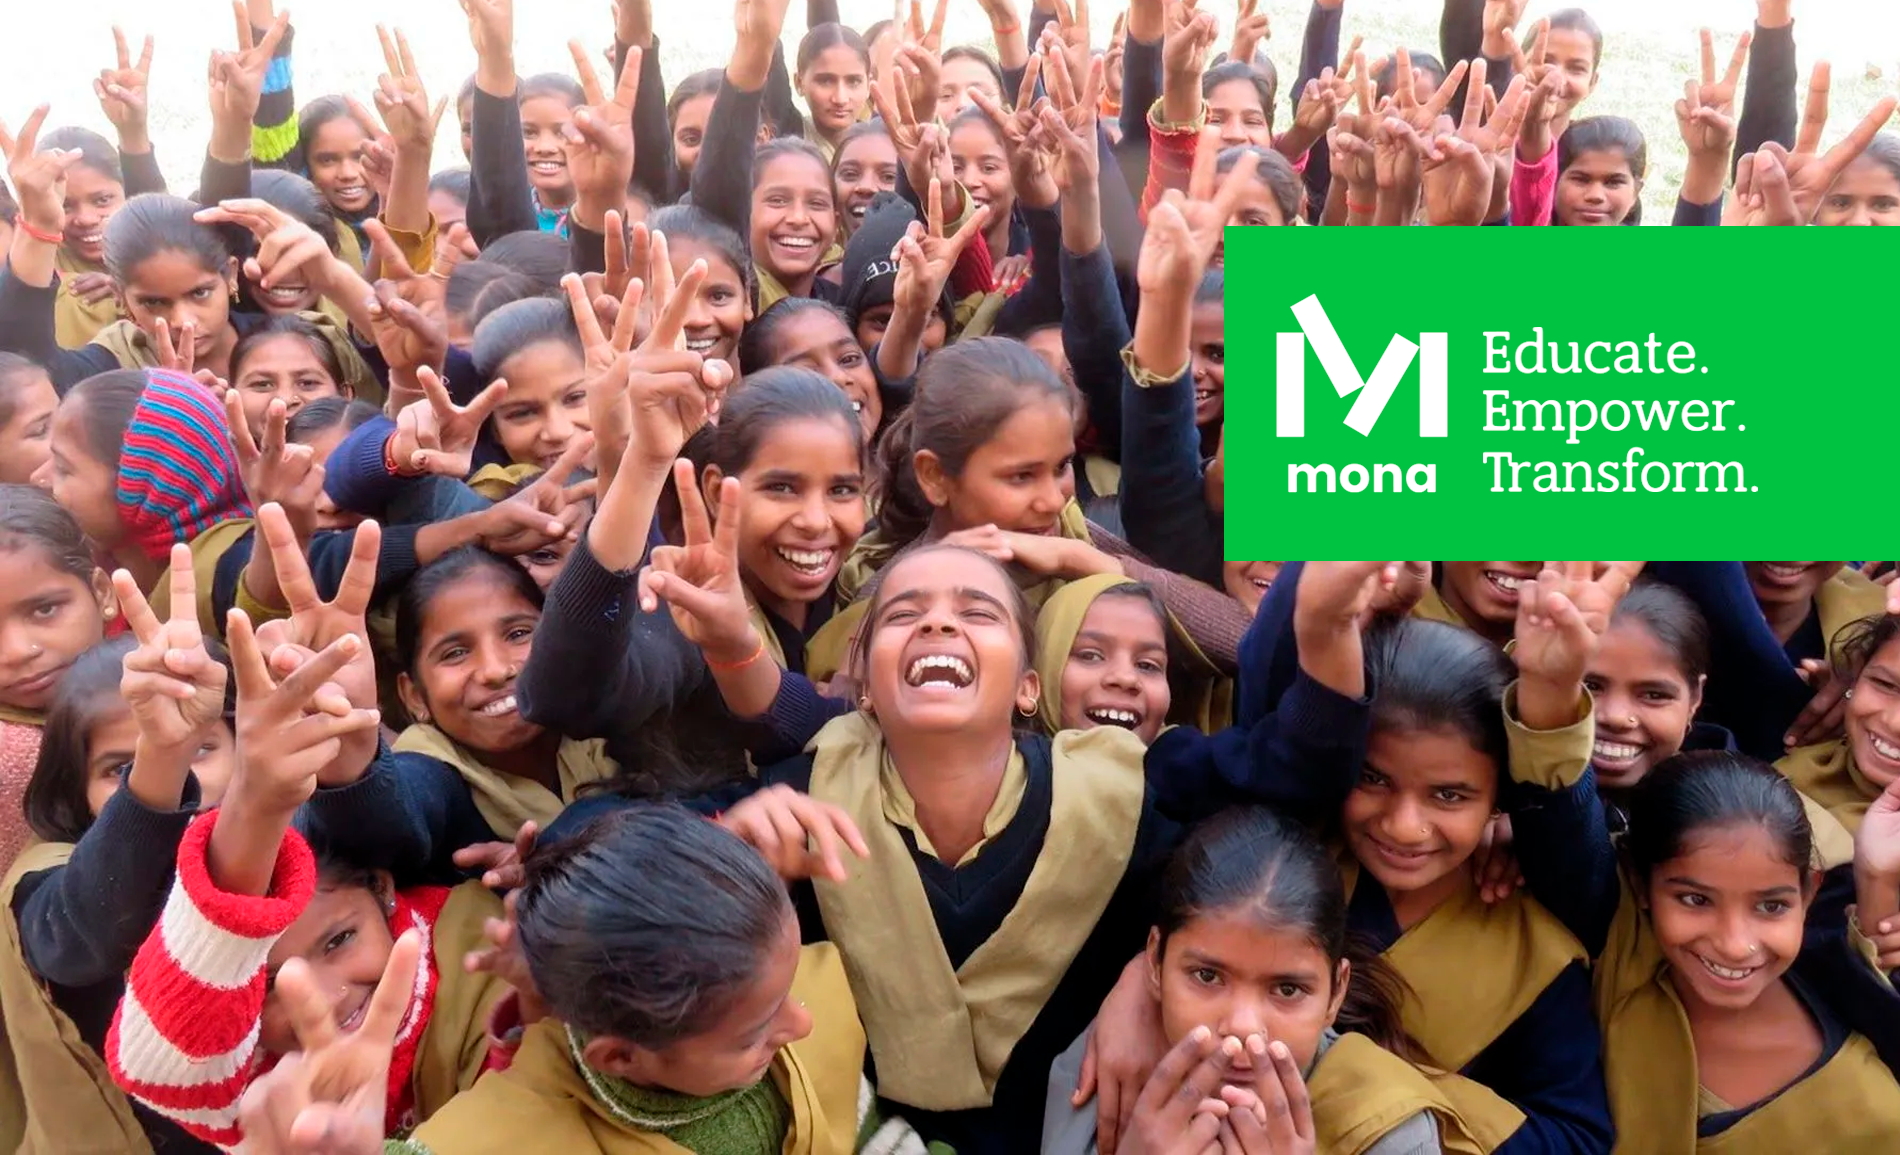 Mona Foundation, Educating Children & Empowering Women — Employee's Choice Donation